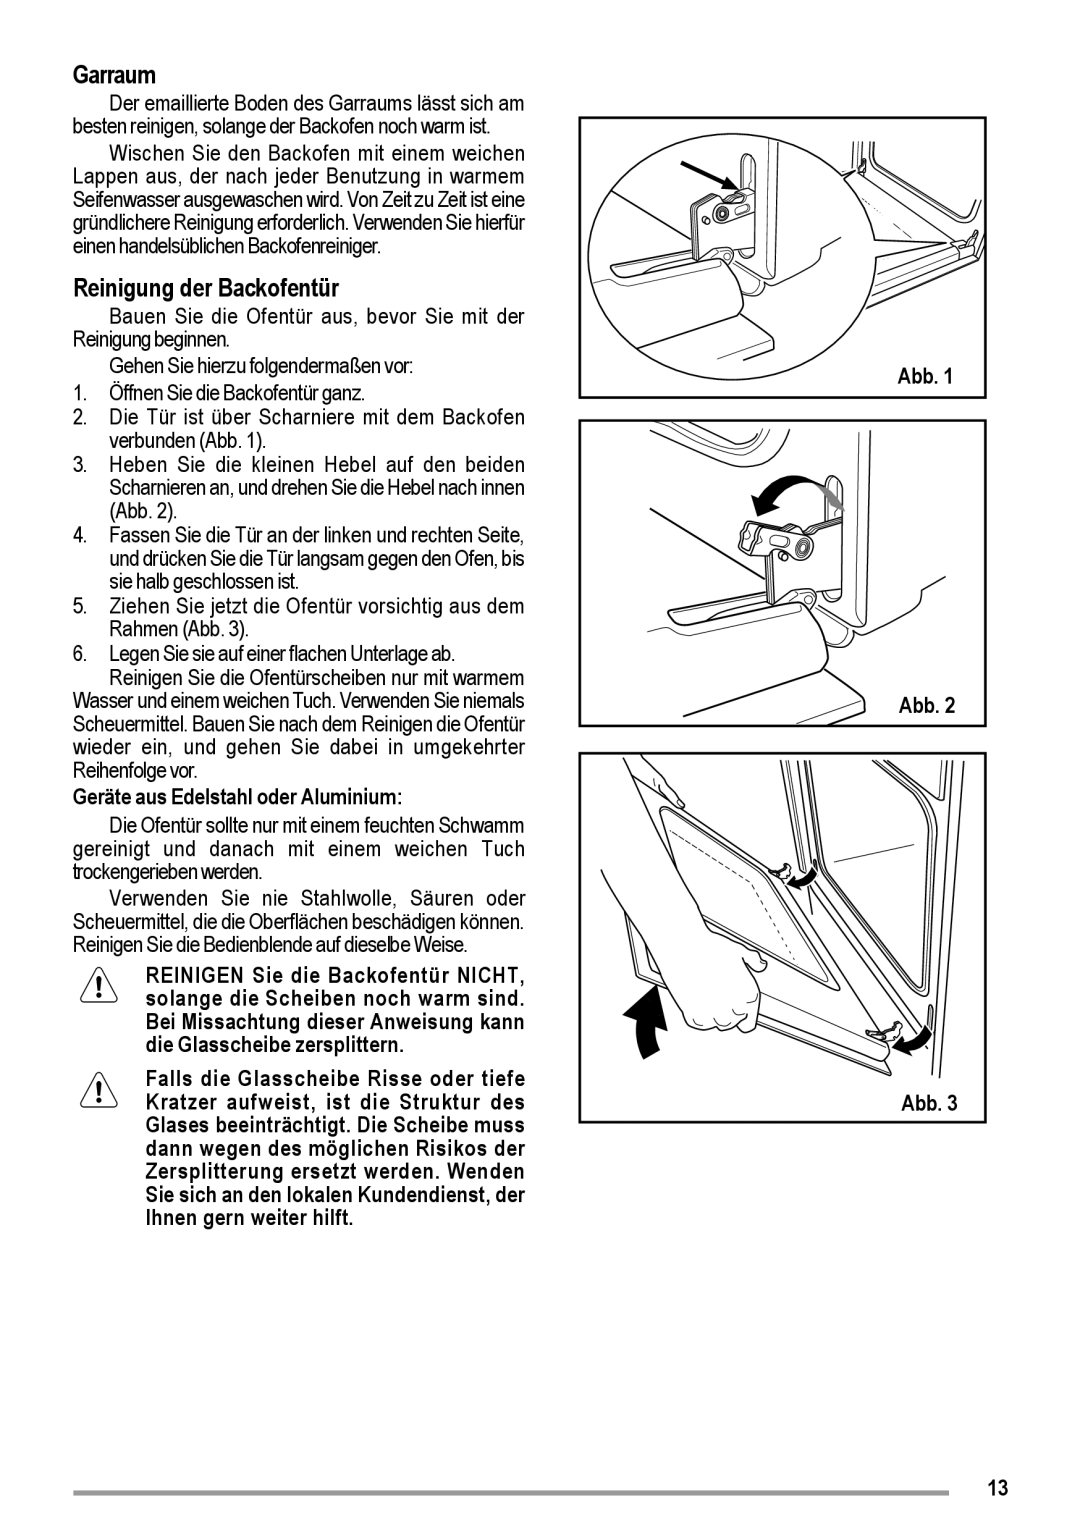 Zanussi ZOU 363 user manual Garraum, Reinigung der Backofentür, Geräte aus Edelstahl oder Aluminium, Abb 